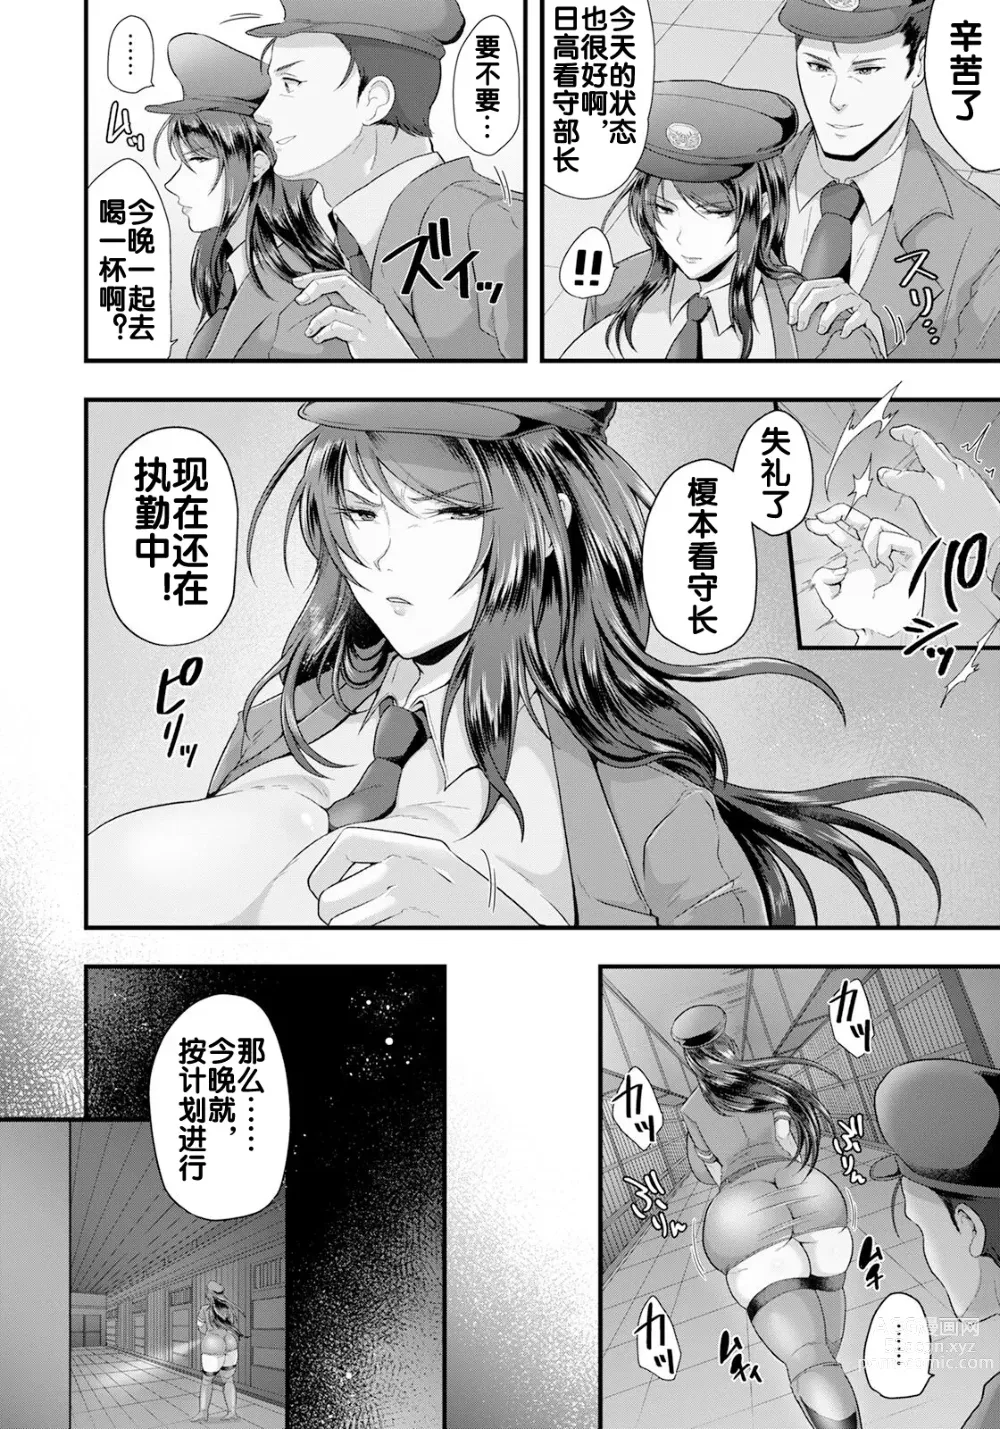 Page 3 of manga Rinkangoku Onna Kanshu